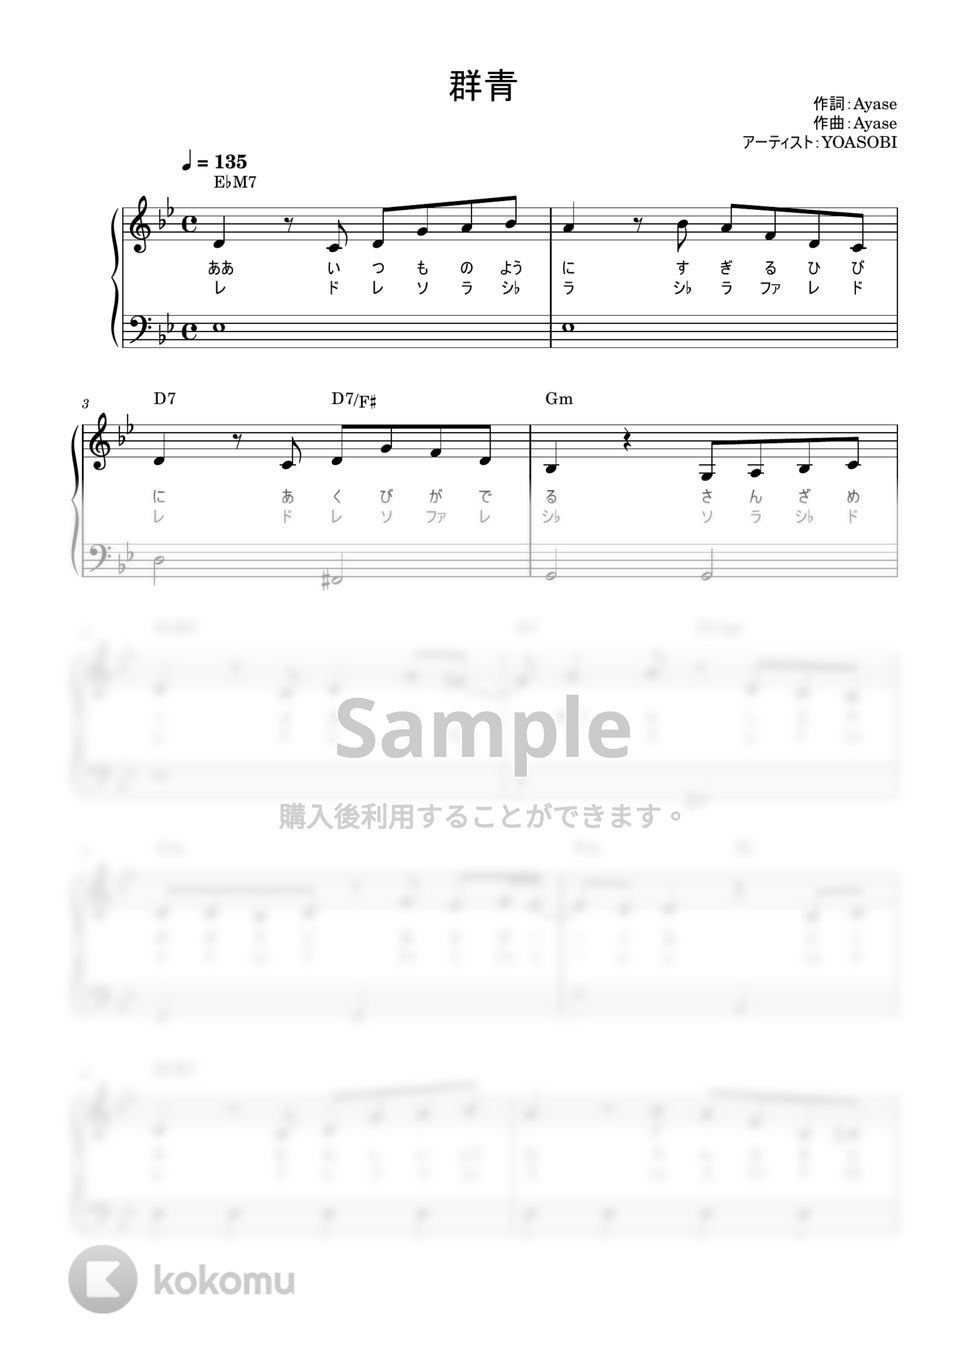 YOASOBI - 群青 (かんたん / 歌詞付き / ドレミ付き / 初心者) by piano.tokyo